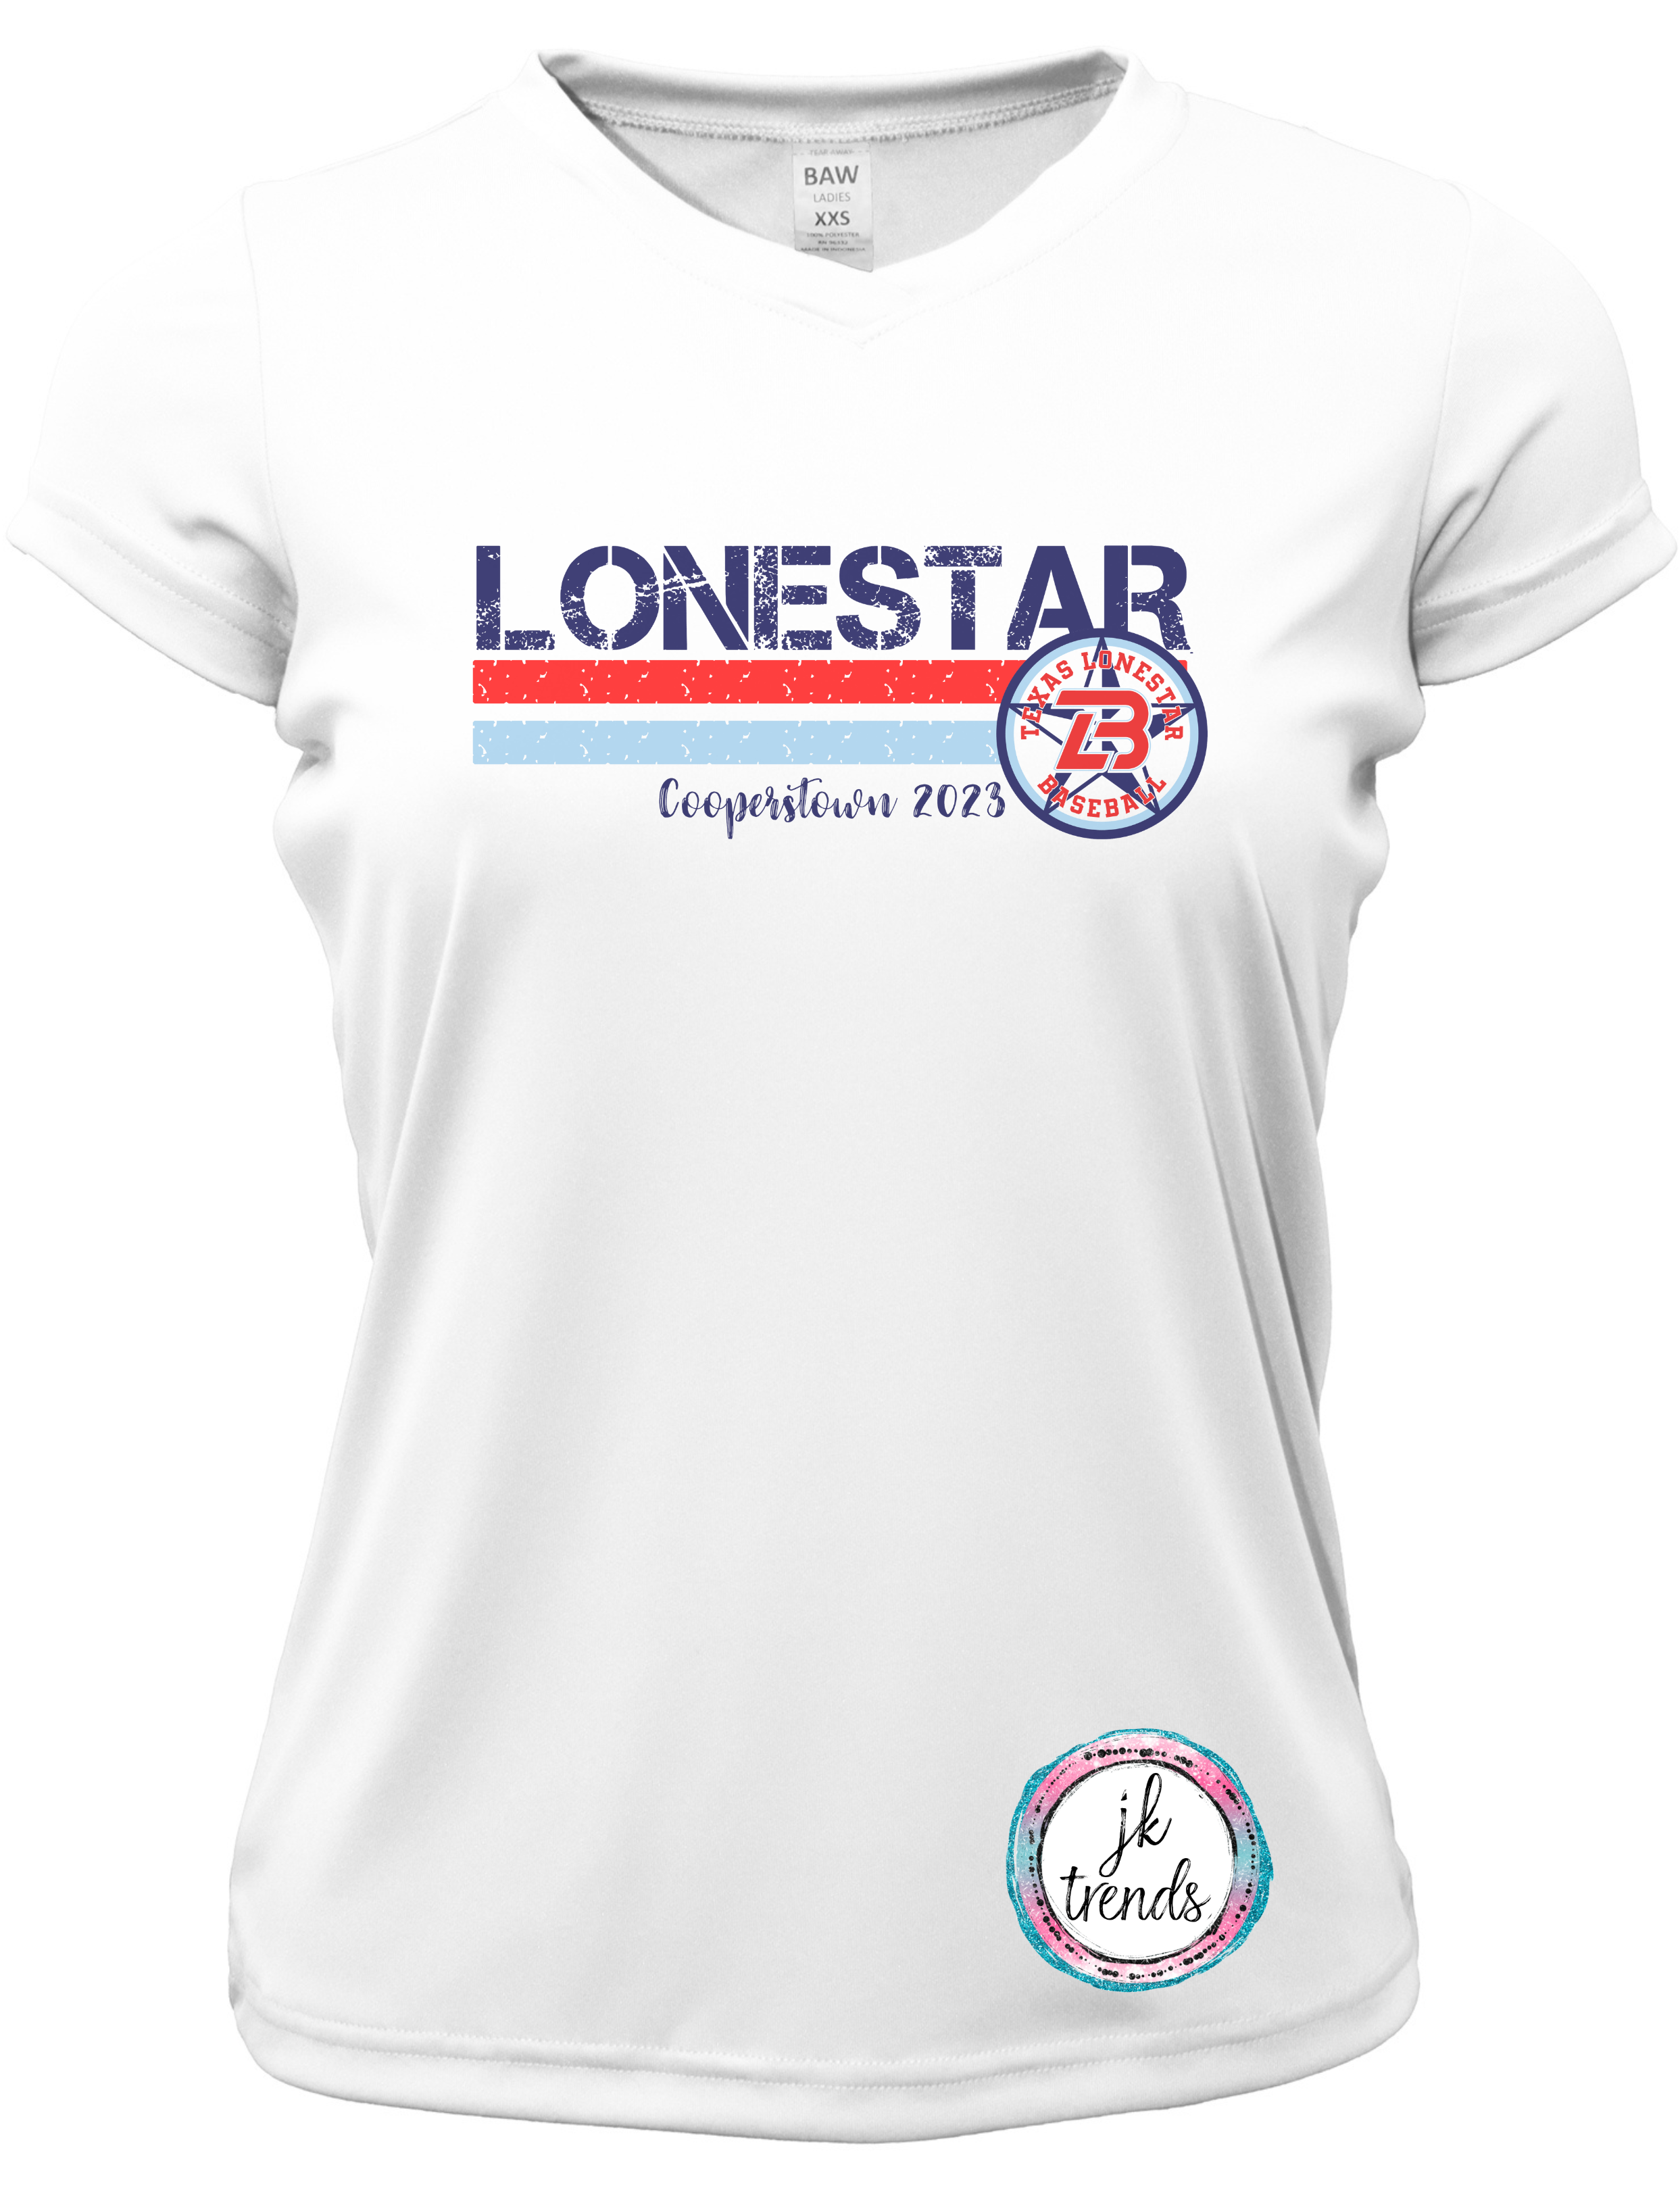 Lonestar Cooperstown 2023